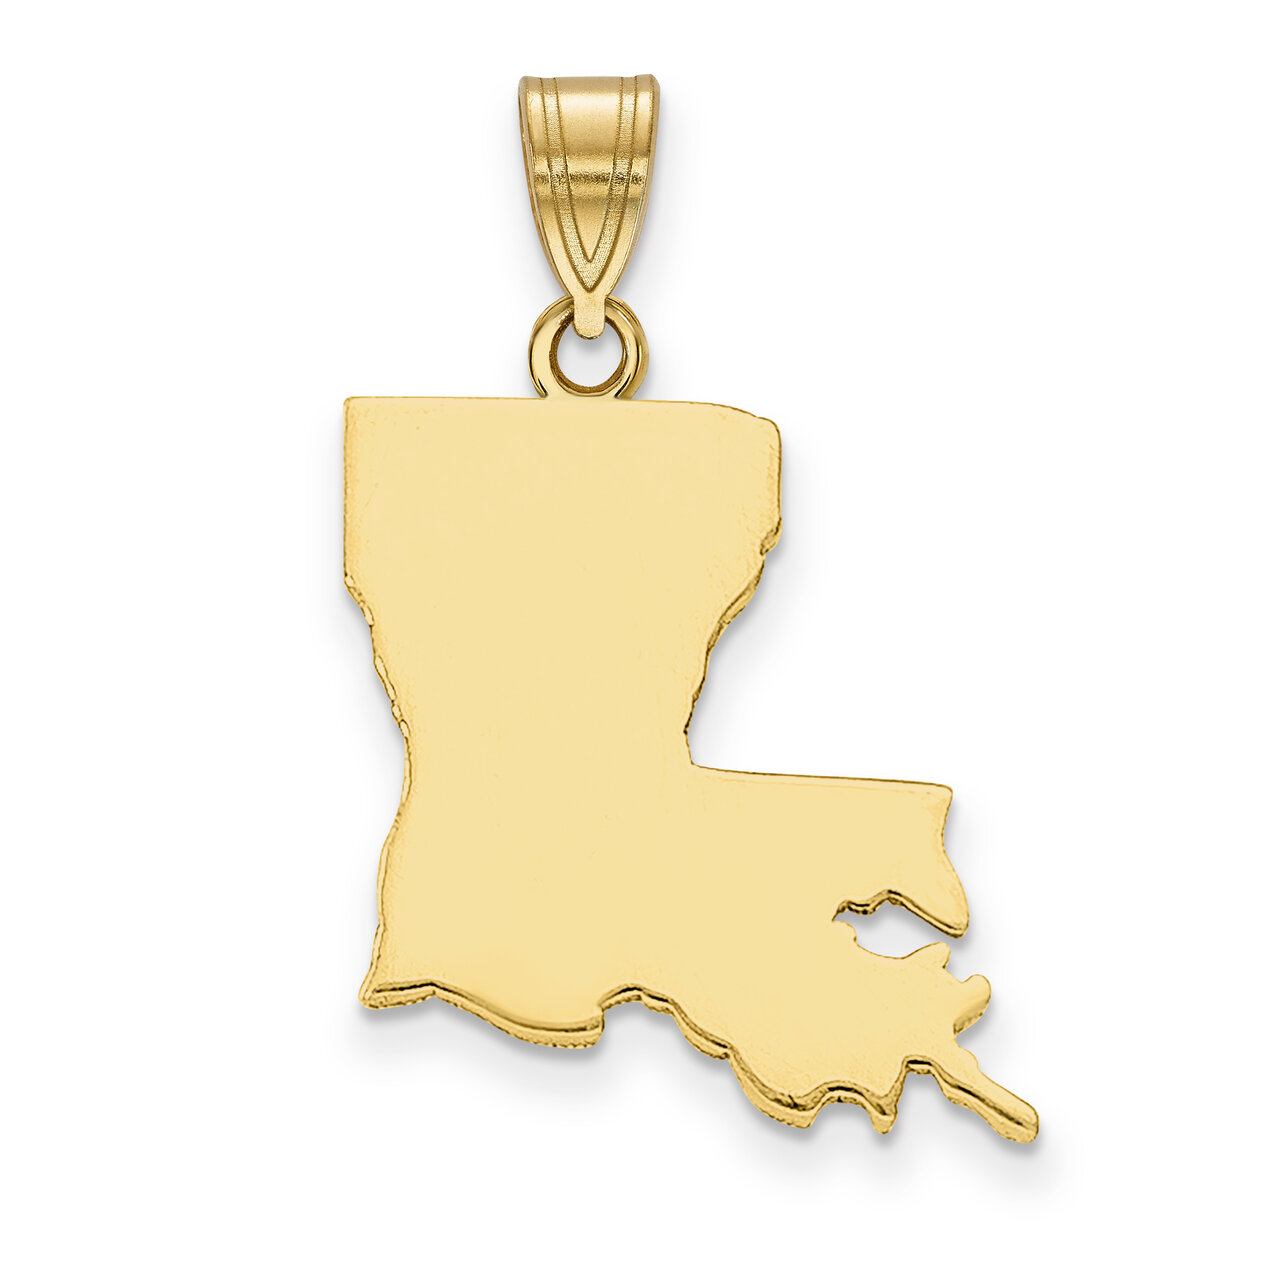 Louisiana State Pendant Charm 14k Yellow Gold Engravable XNA707Y-LA